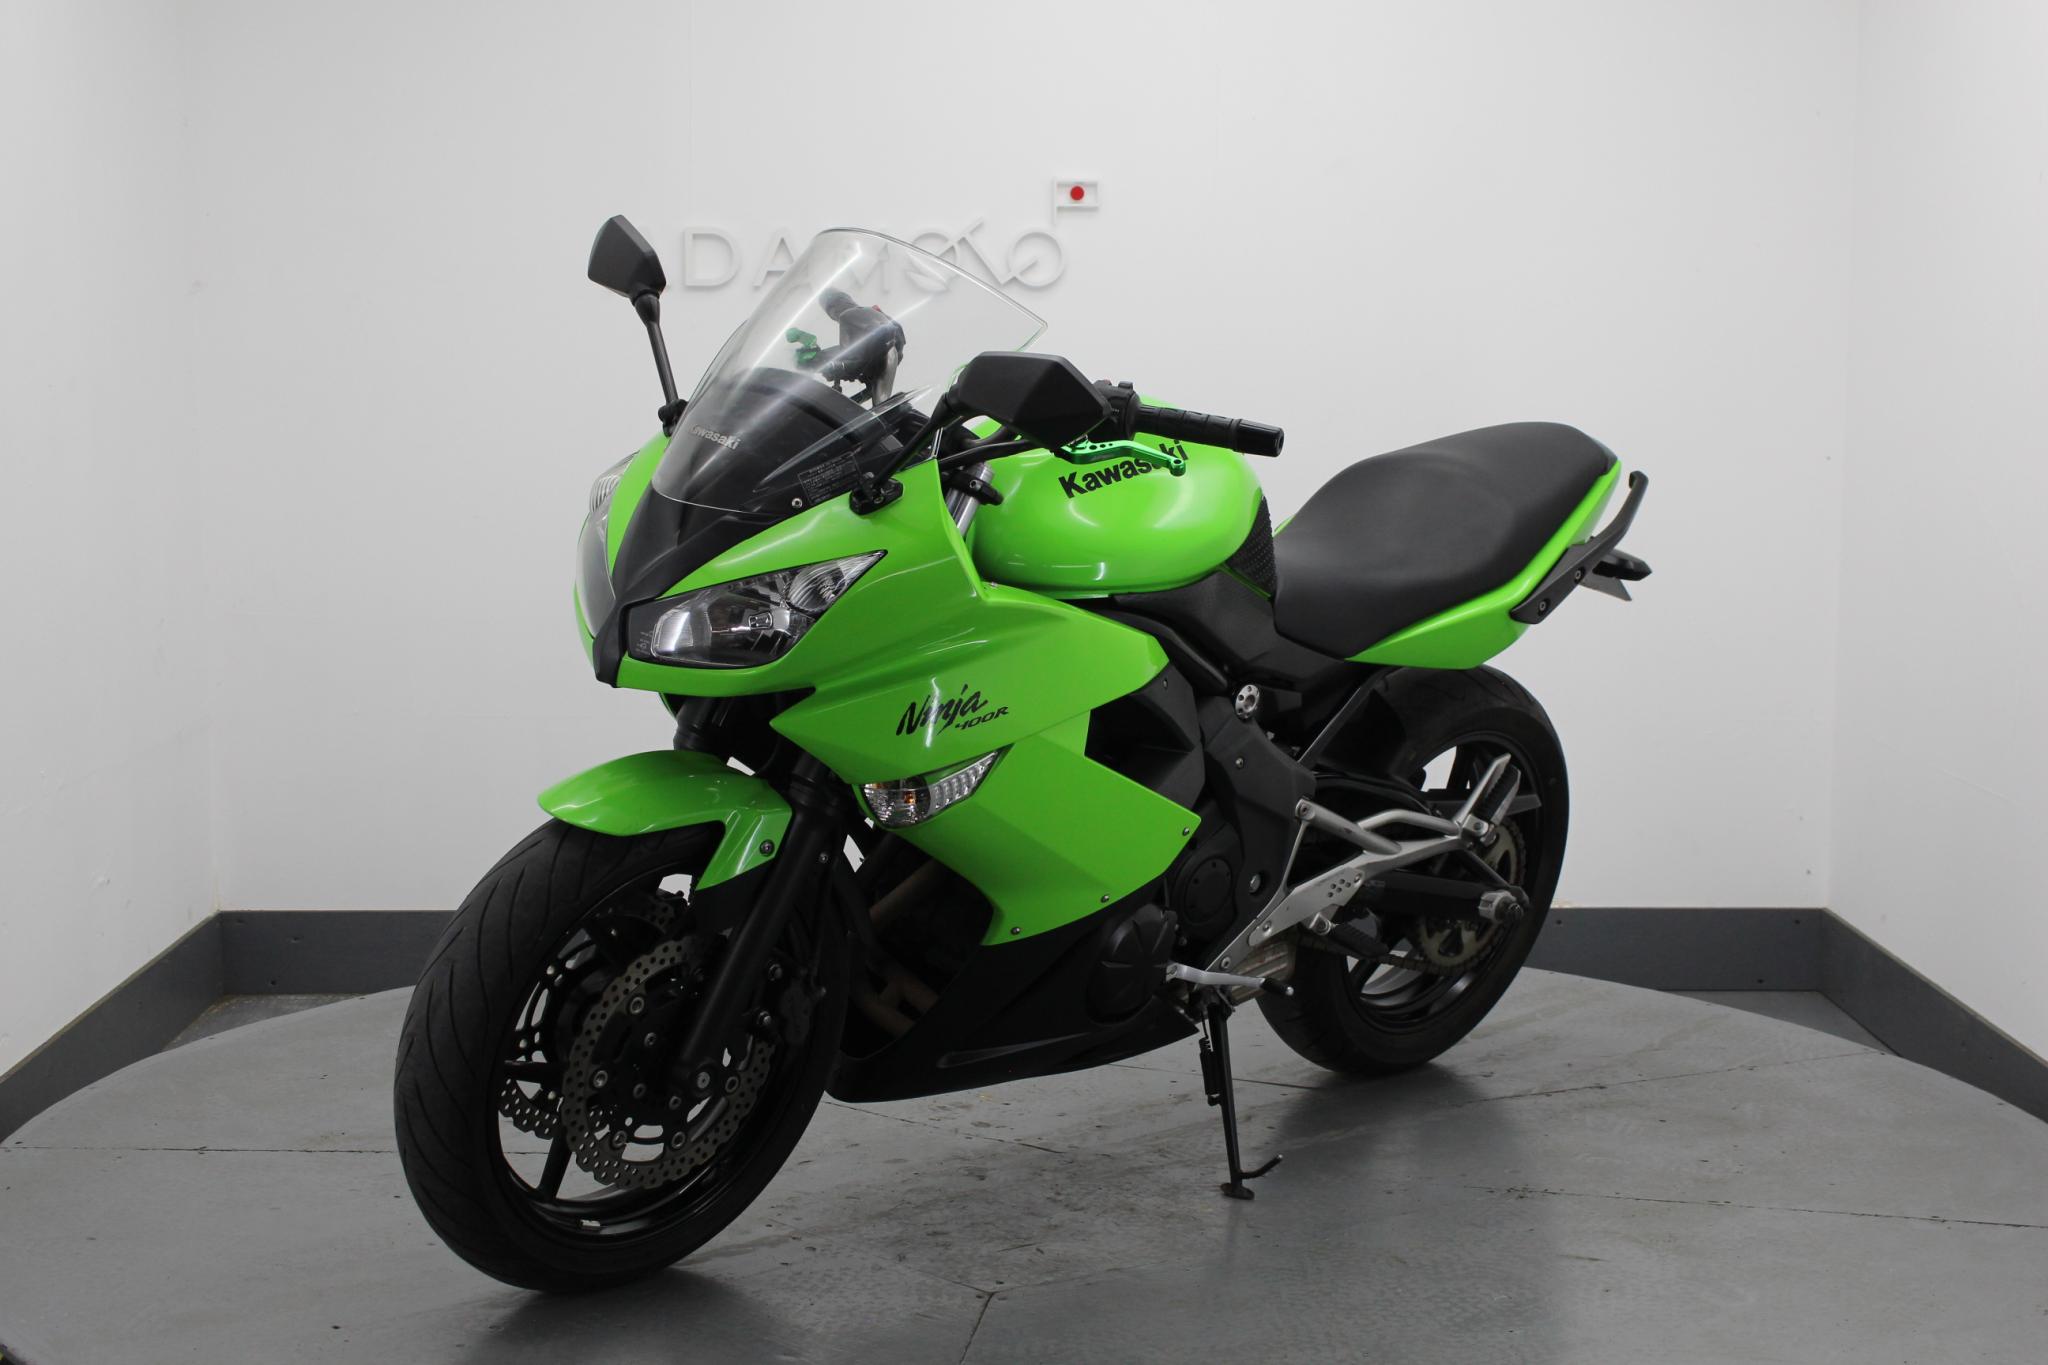 Kawasaki Ninja 400R - Adamoto - Motorcycles from Japan